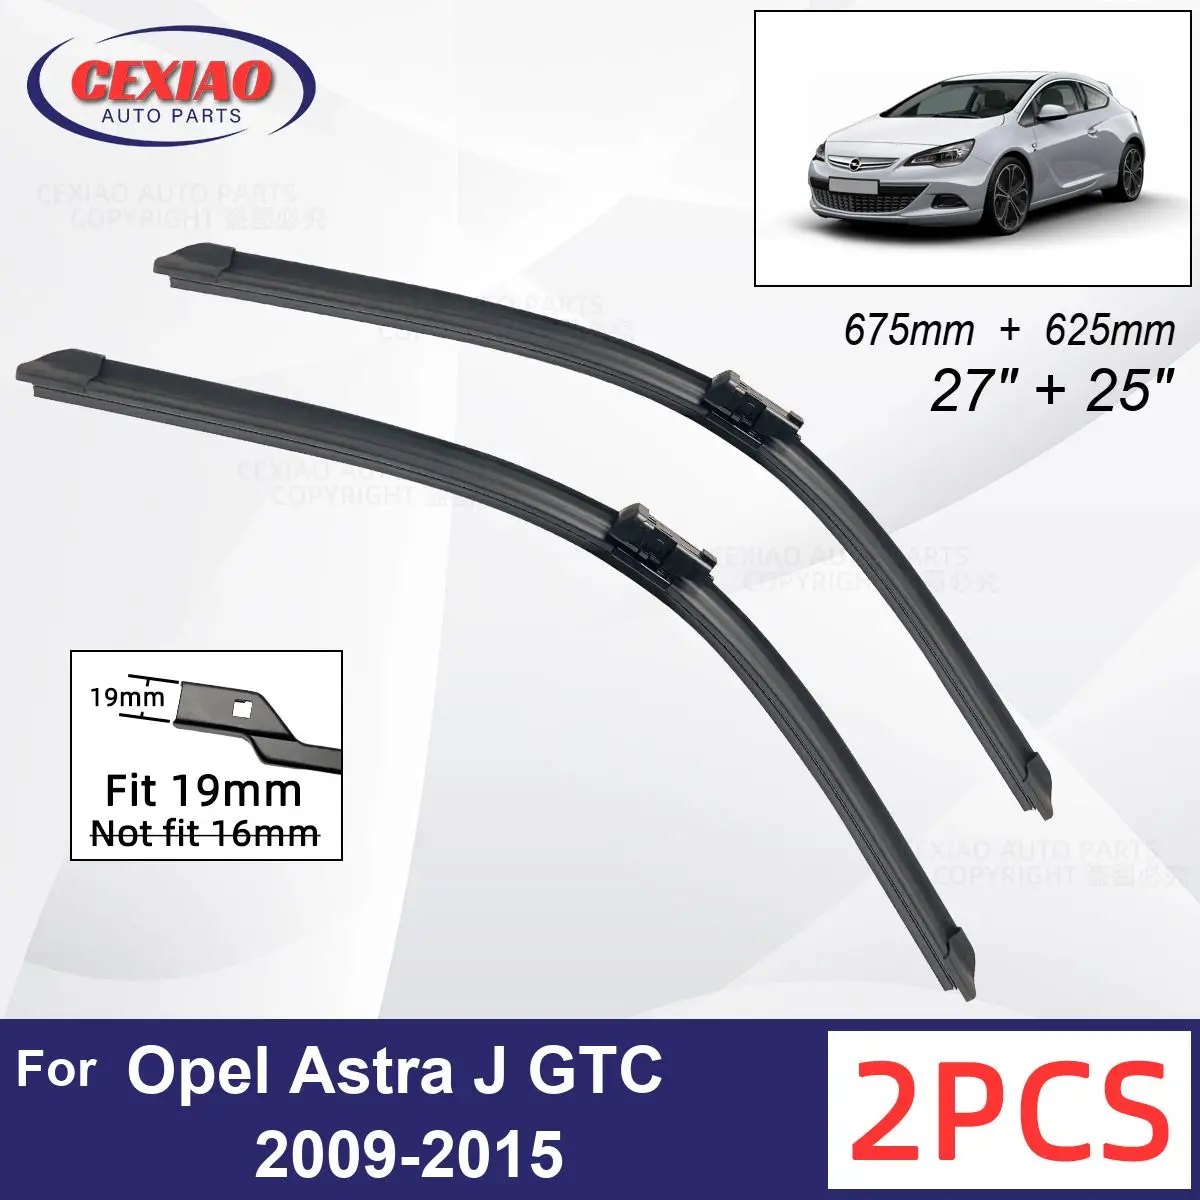 

Car Wiper For Opel Astra J GTC 2009-2015 Front Wiper Blades Soft Rubber Windscreen Wipers Auto Windshield 27"+25" 675mm + 625mm